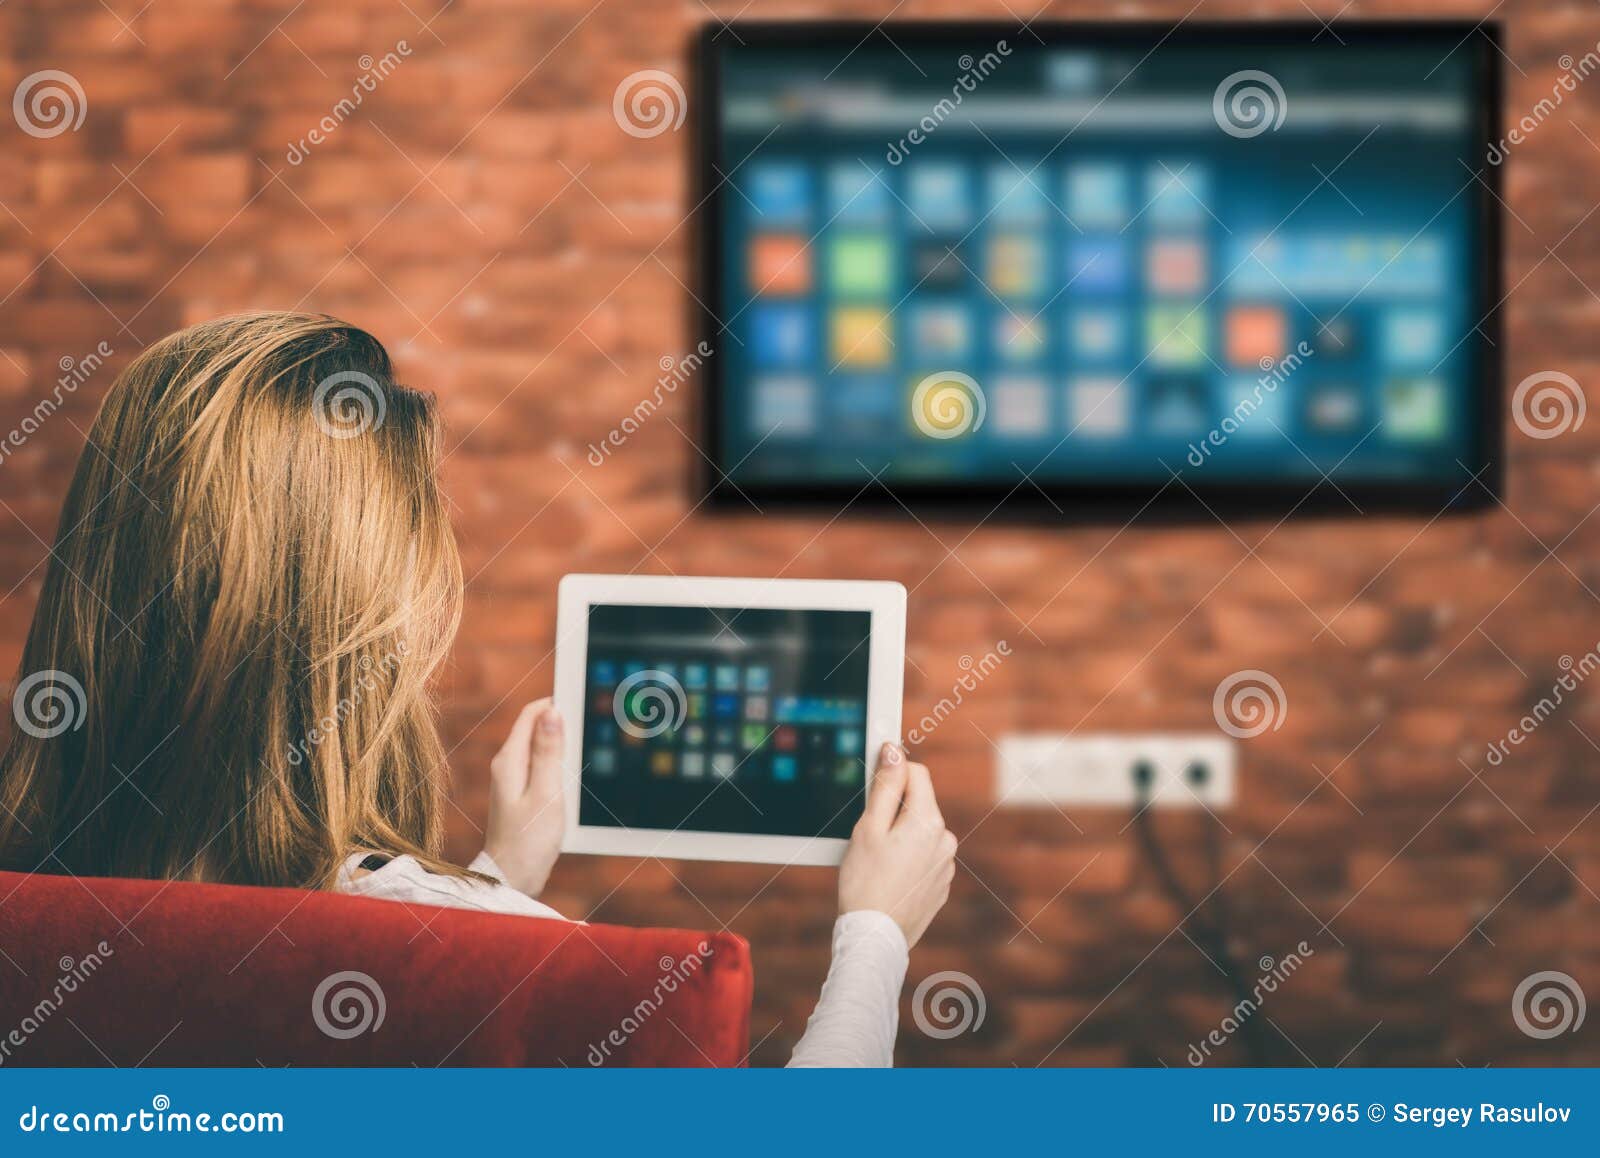 young woman watching smart tv.